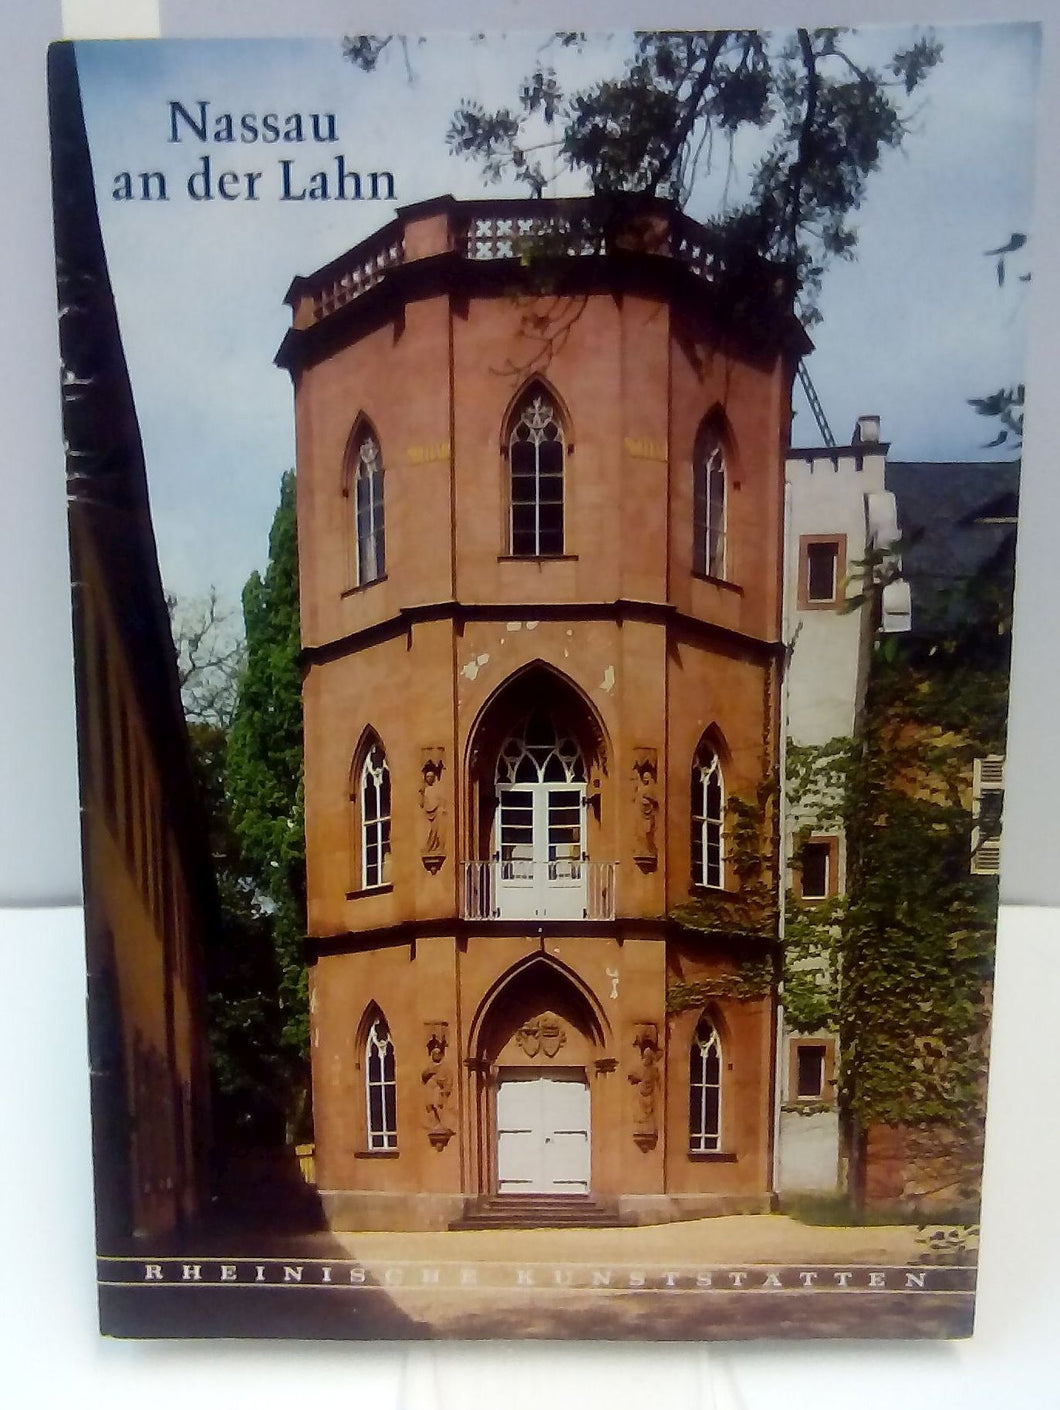 Rheinische Kunststätten Heft 239 - Nassau an der Lahn (1980)